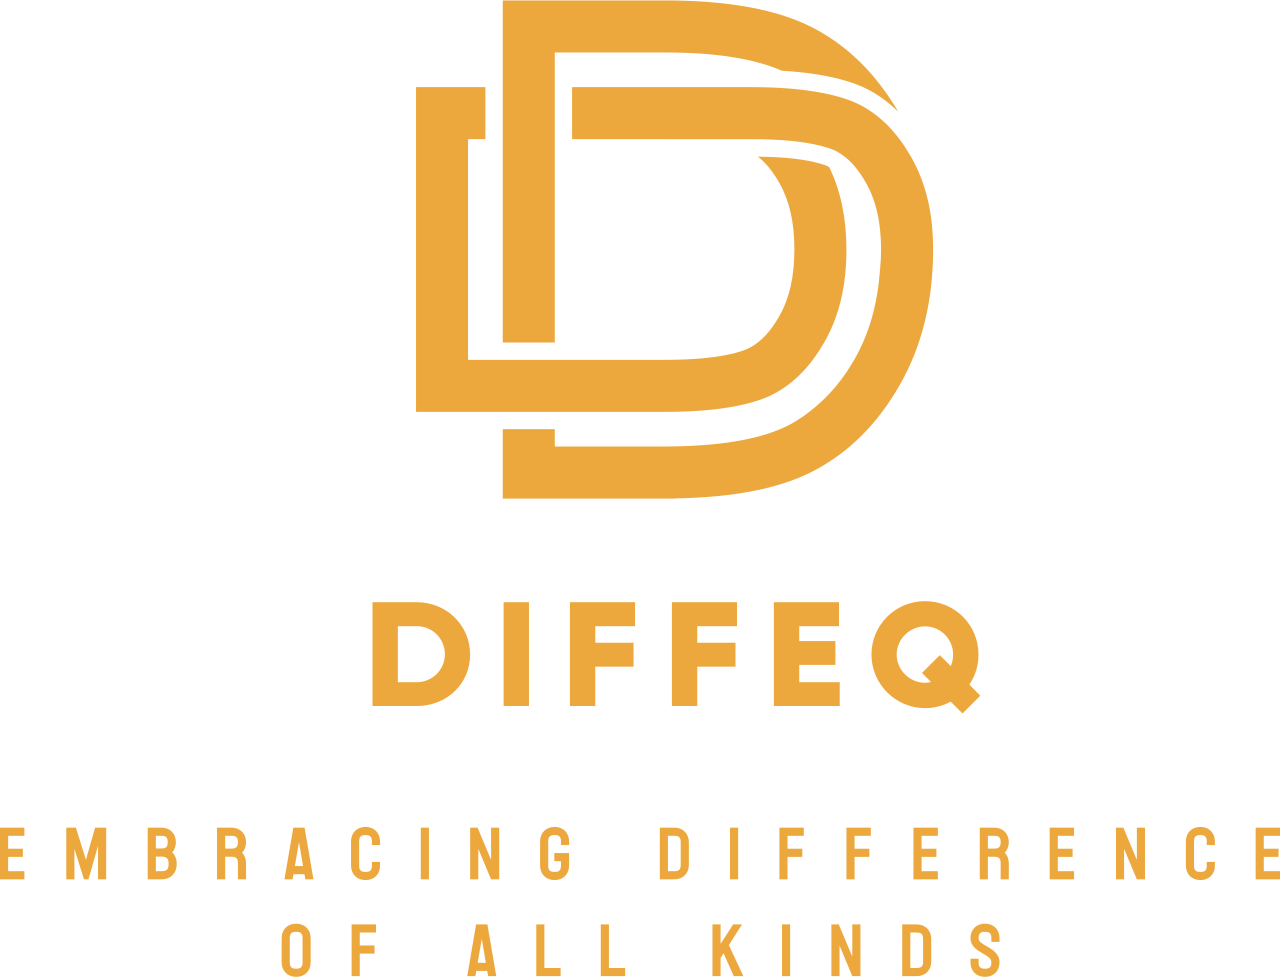 DiffEQ's logo